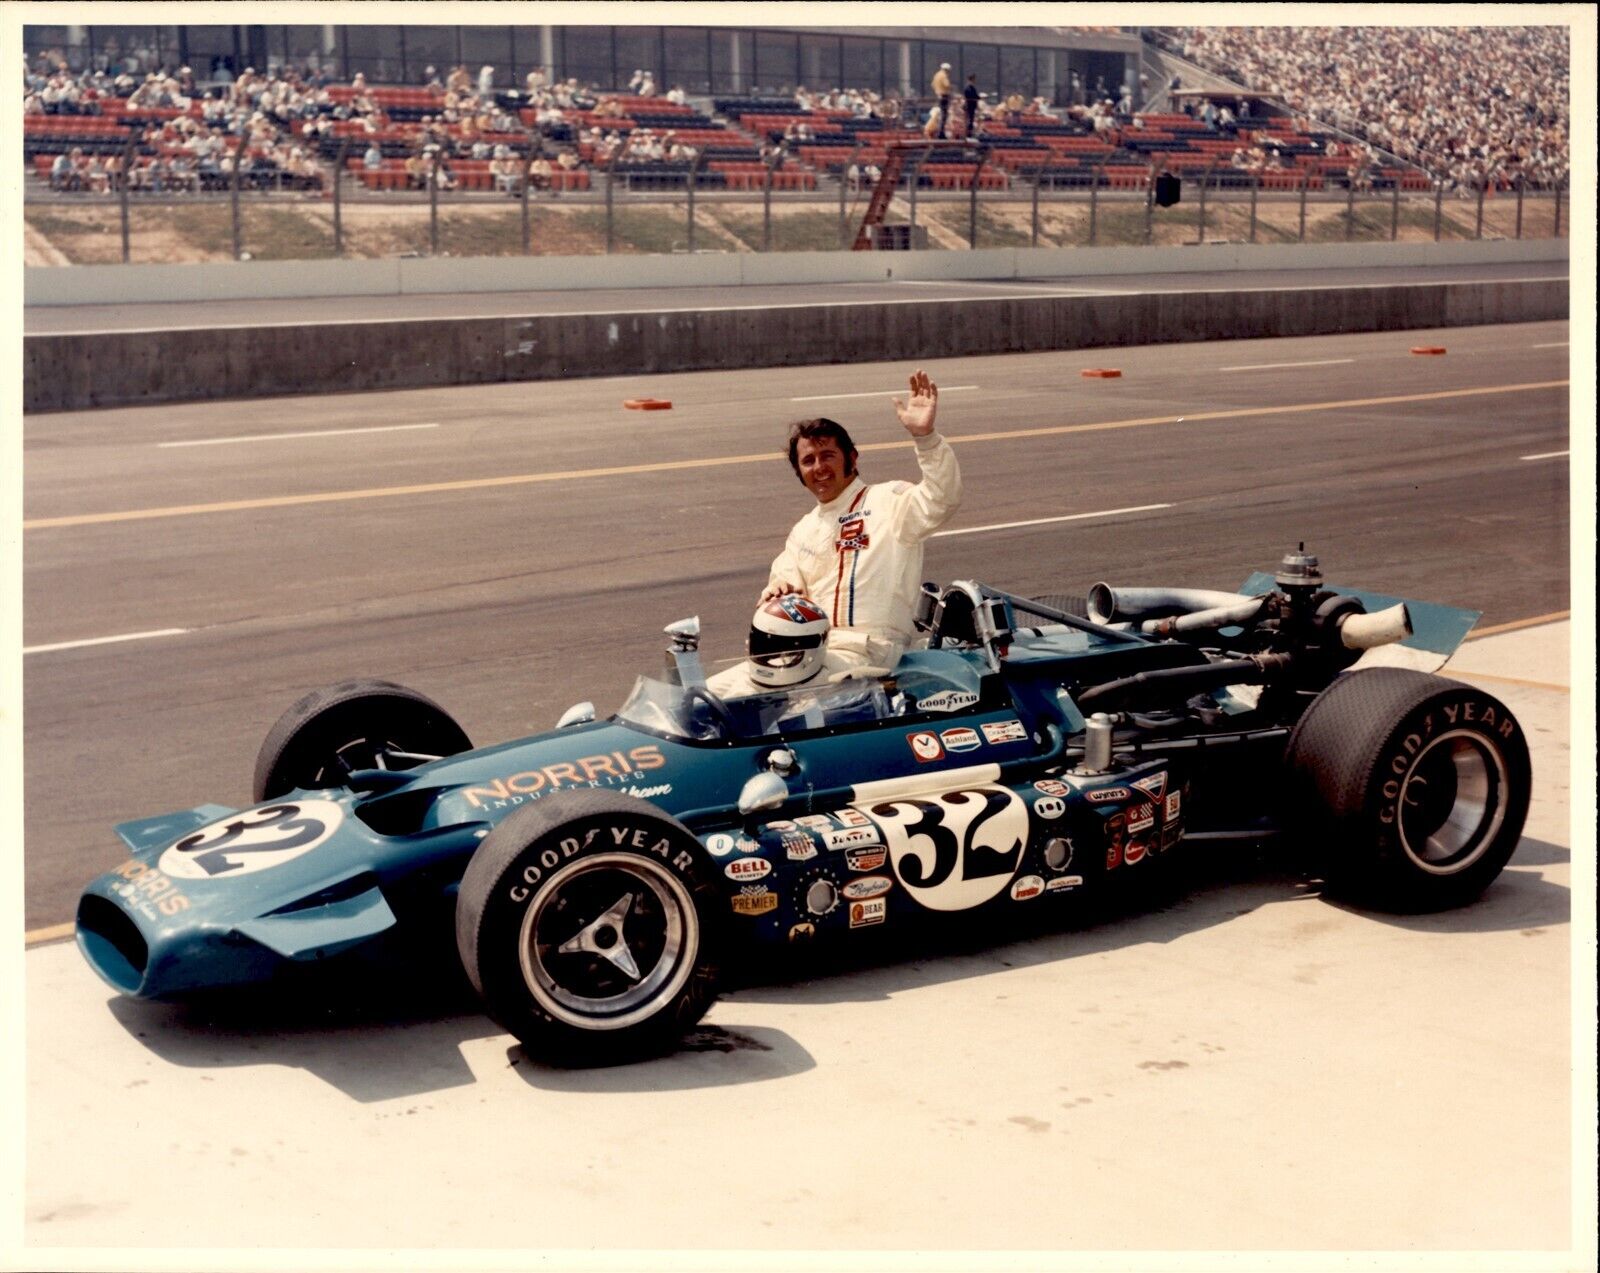 LD339 1970 Orig Darryl Norenberg Photo LEEROY YARBROUGH #32 CALIFORNIA 500 RACE